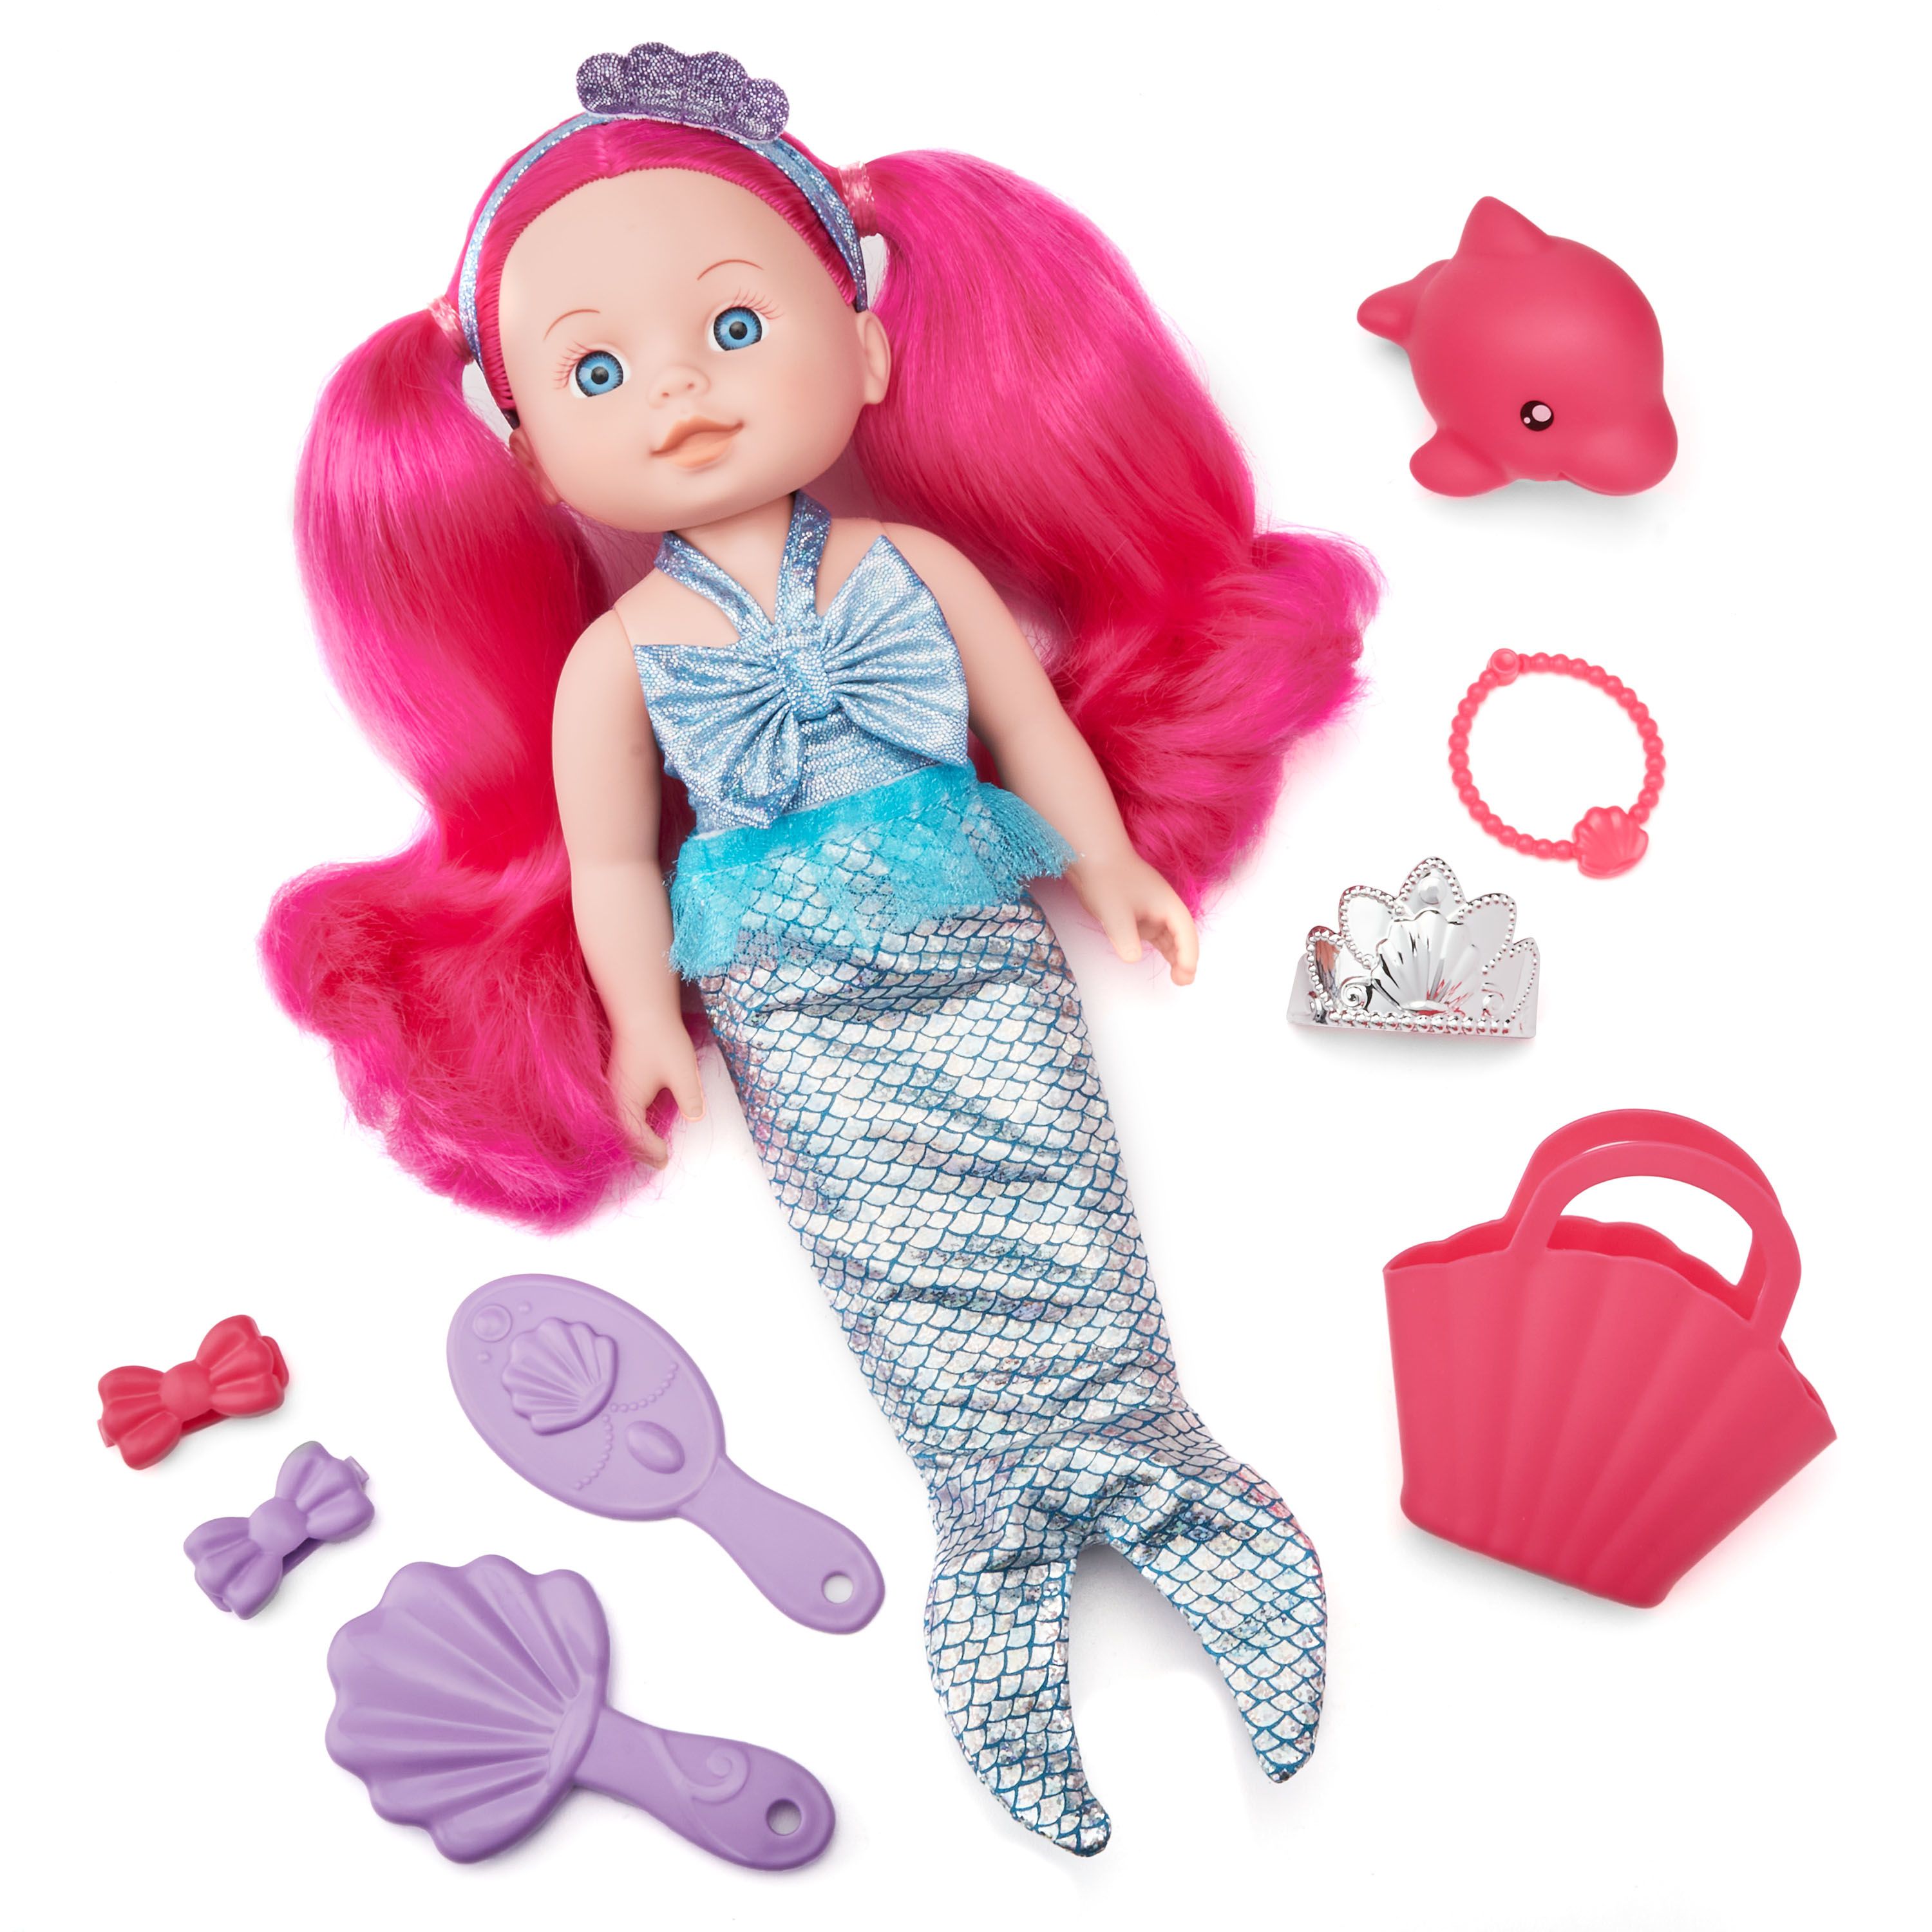 Kid Connection Mermaid Baby Doll Play Set, Blue Eyes, Pink Hair, Light Skin Tone - Walmart.com